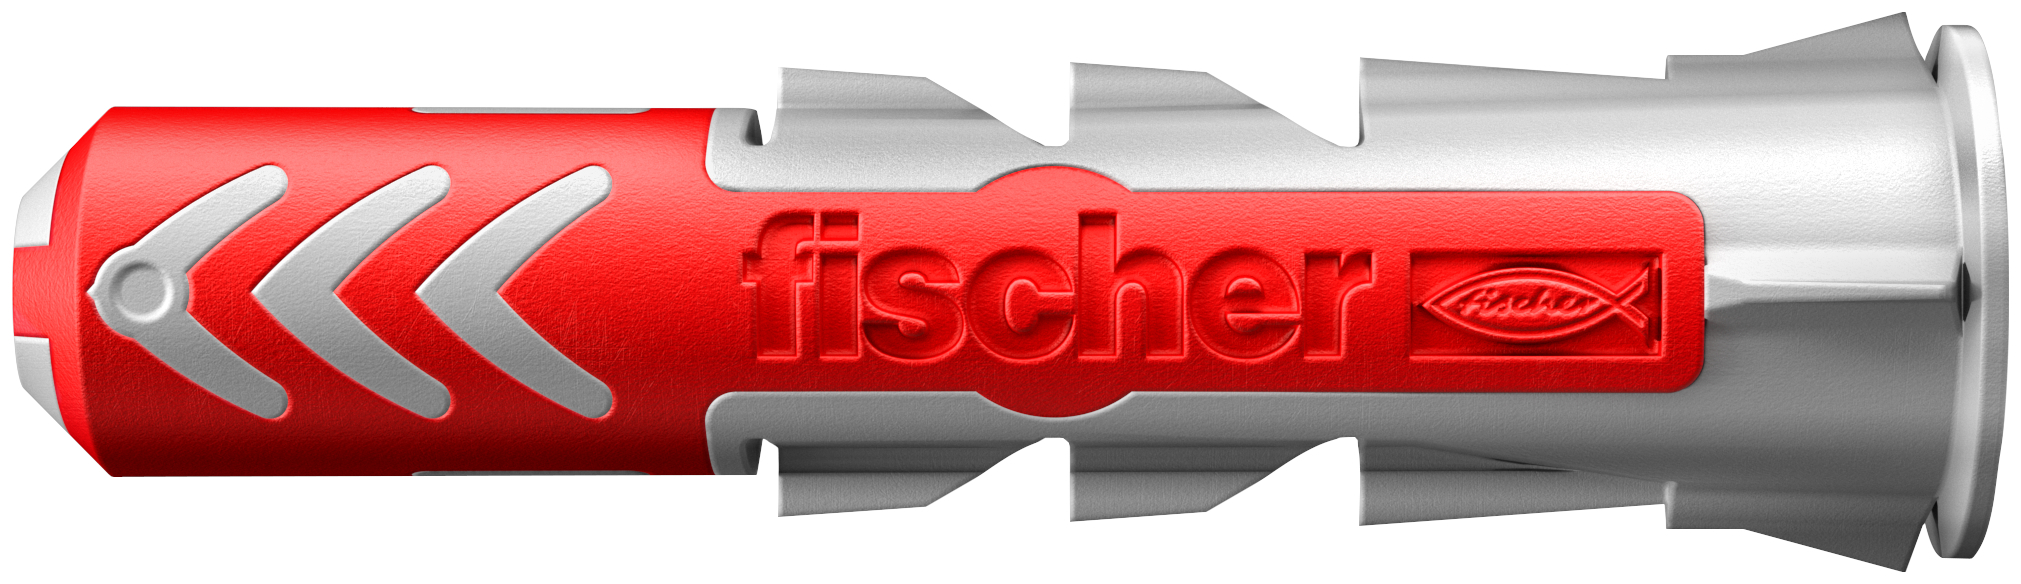 fischer Big Pack Tasselli DuoPower 6 (240 Tasselli) (240 Pz.) Busta di tasselli formato convenienza.